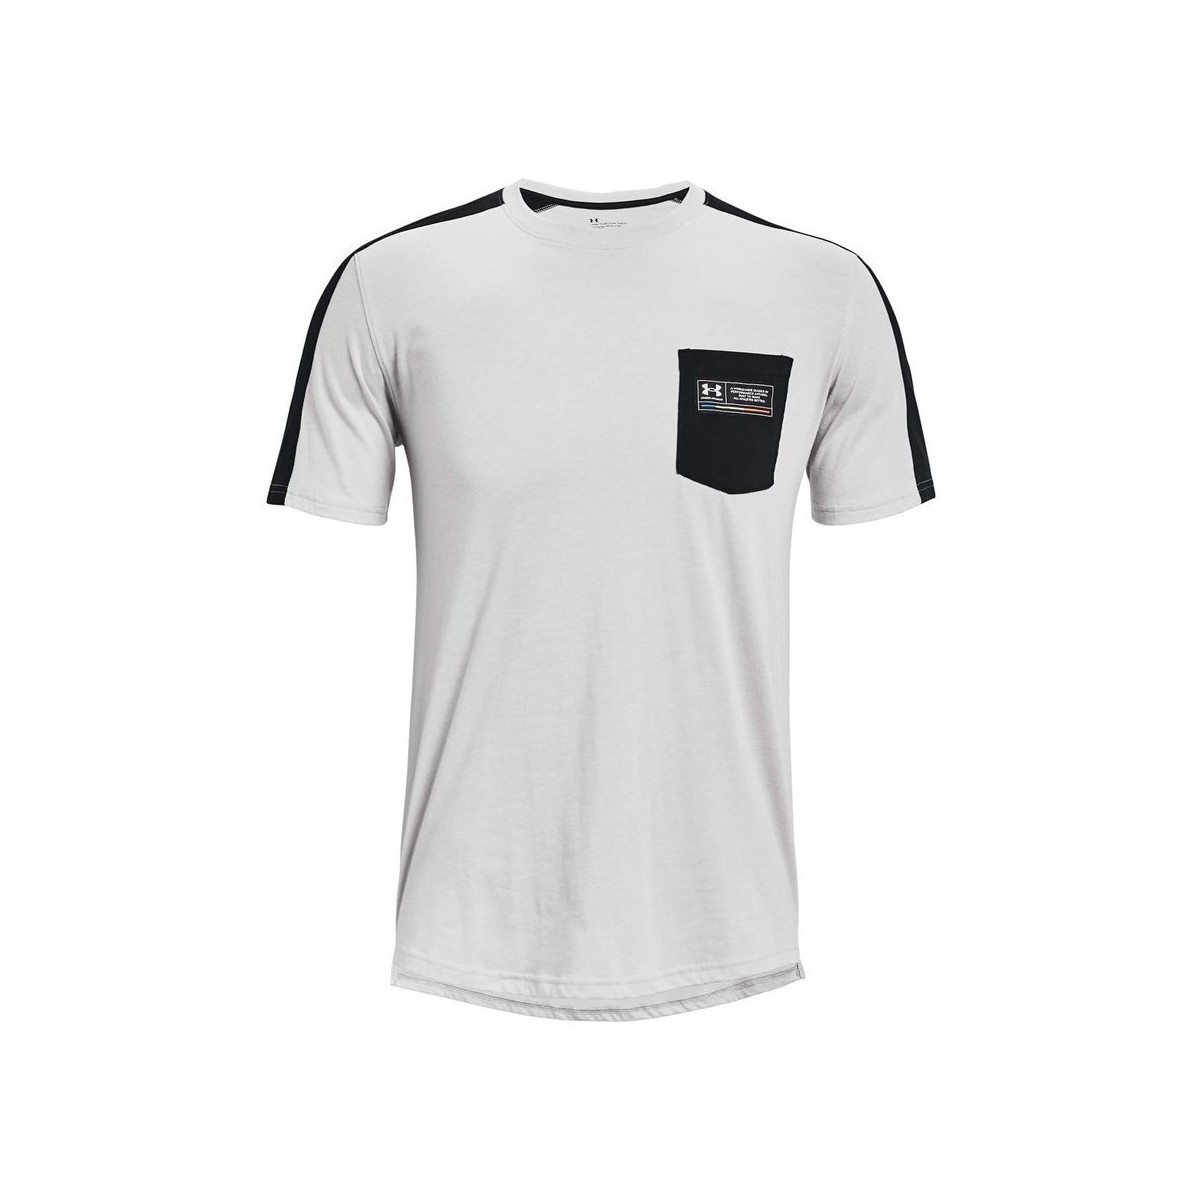 Vêtements Jacket T-shirts manches courtes Under phantom Armour Pocket Blanc